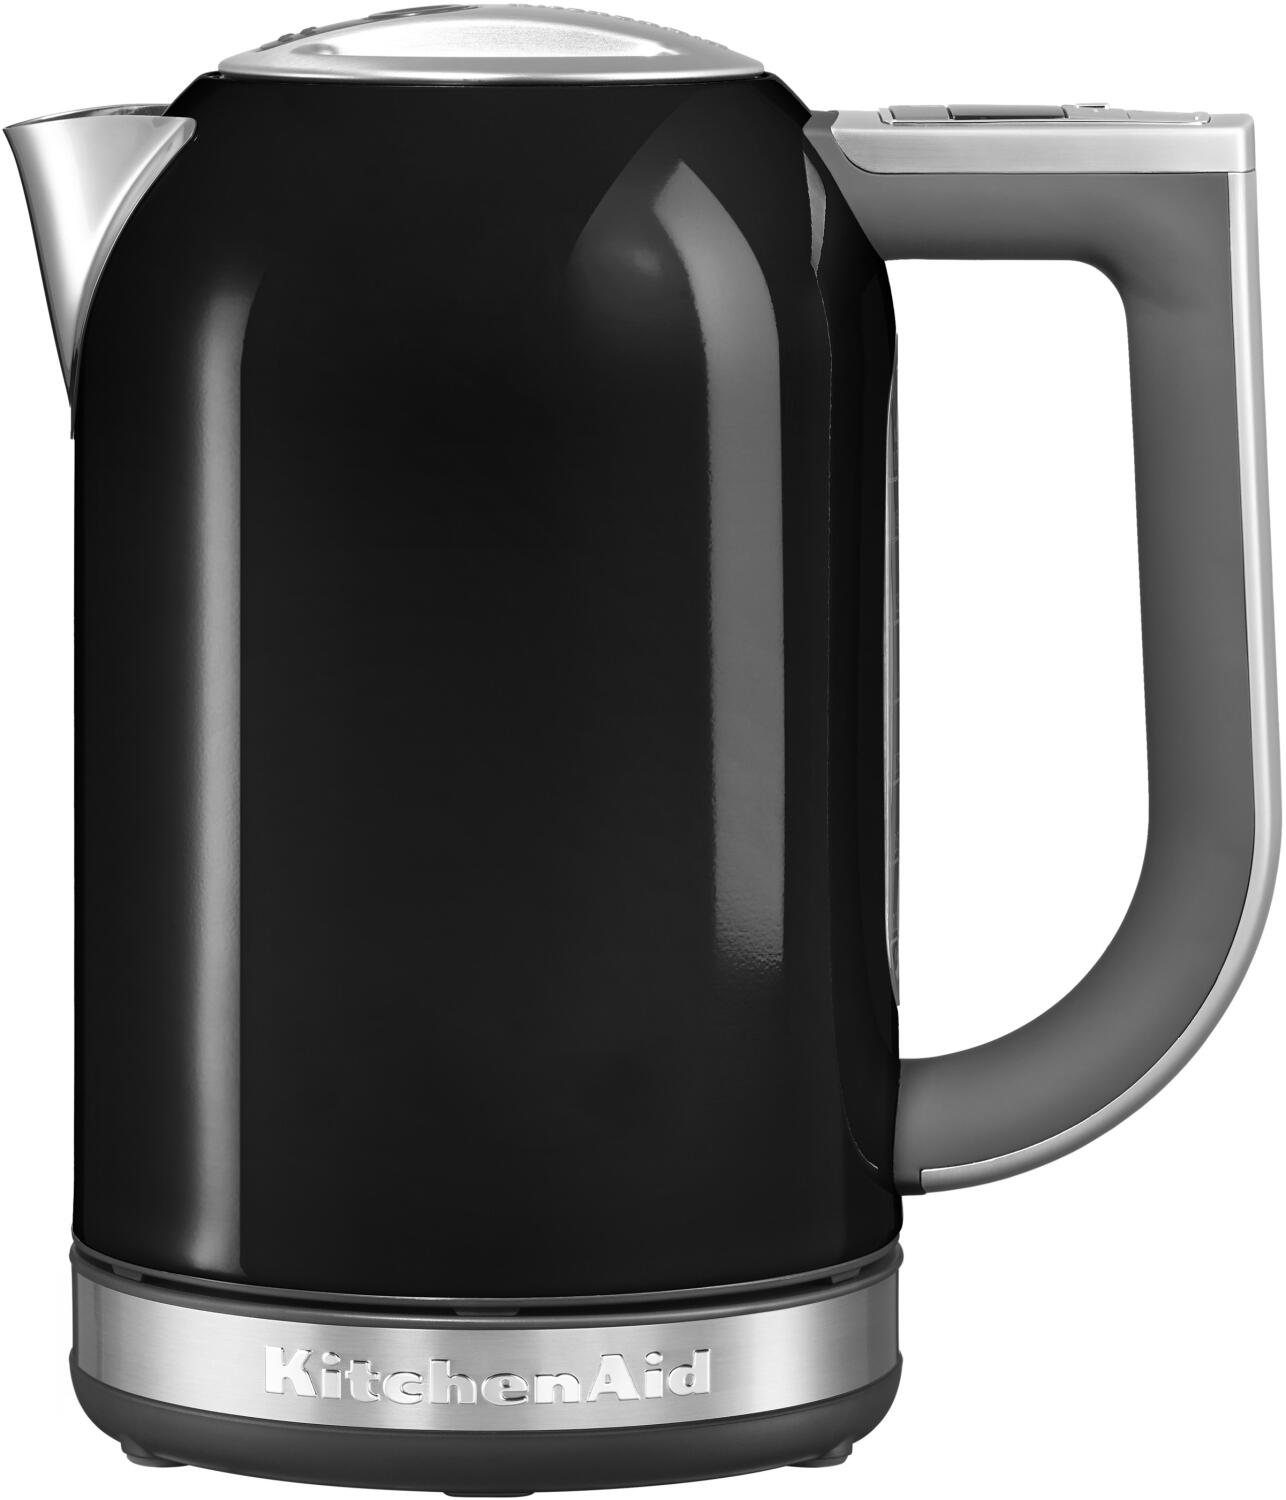 KitchenAid Wasserkocher in onyx schwarz, 1,7 L